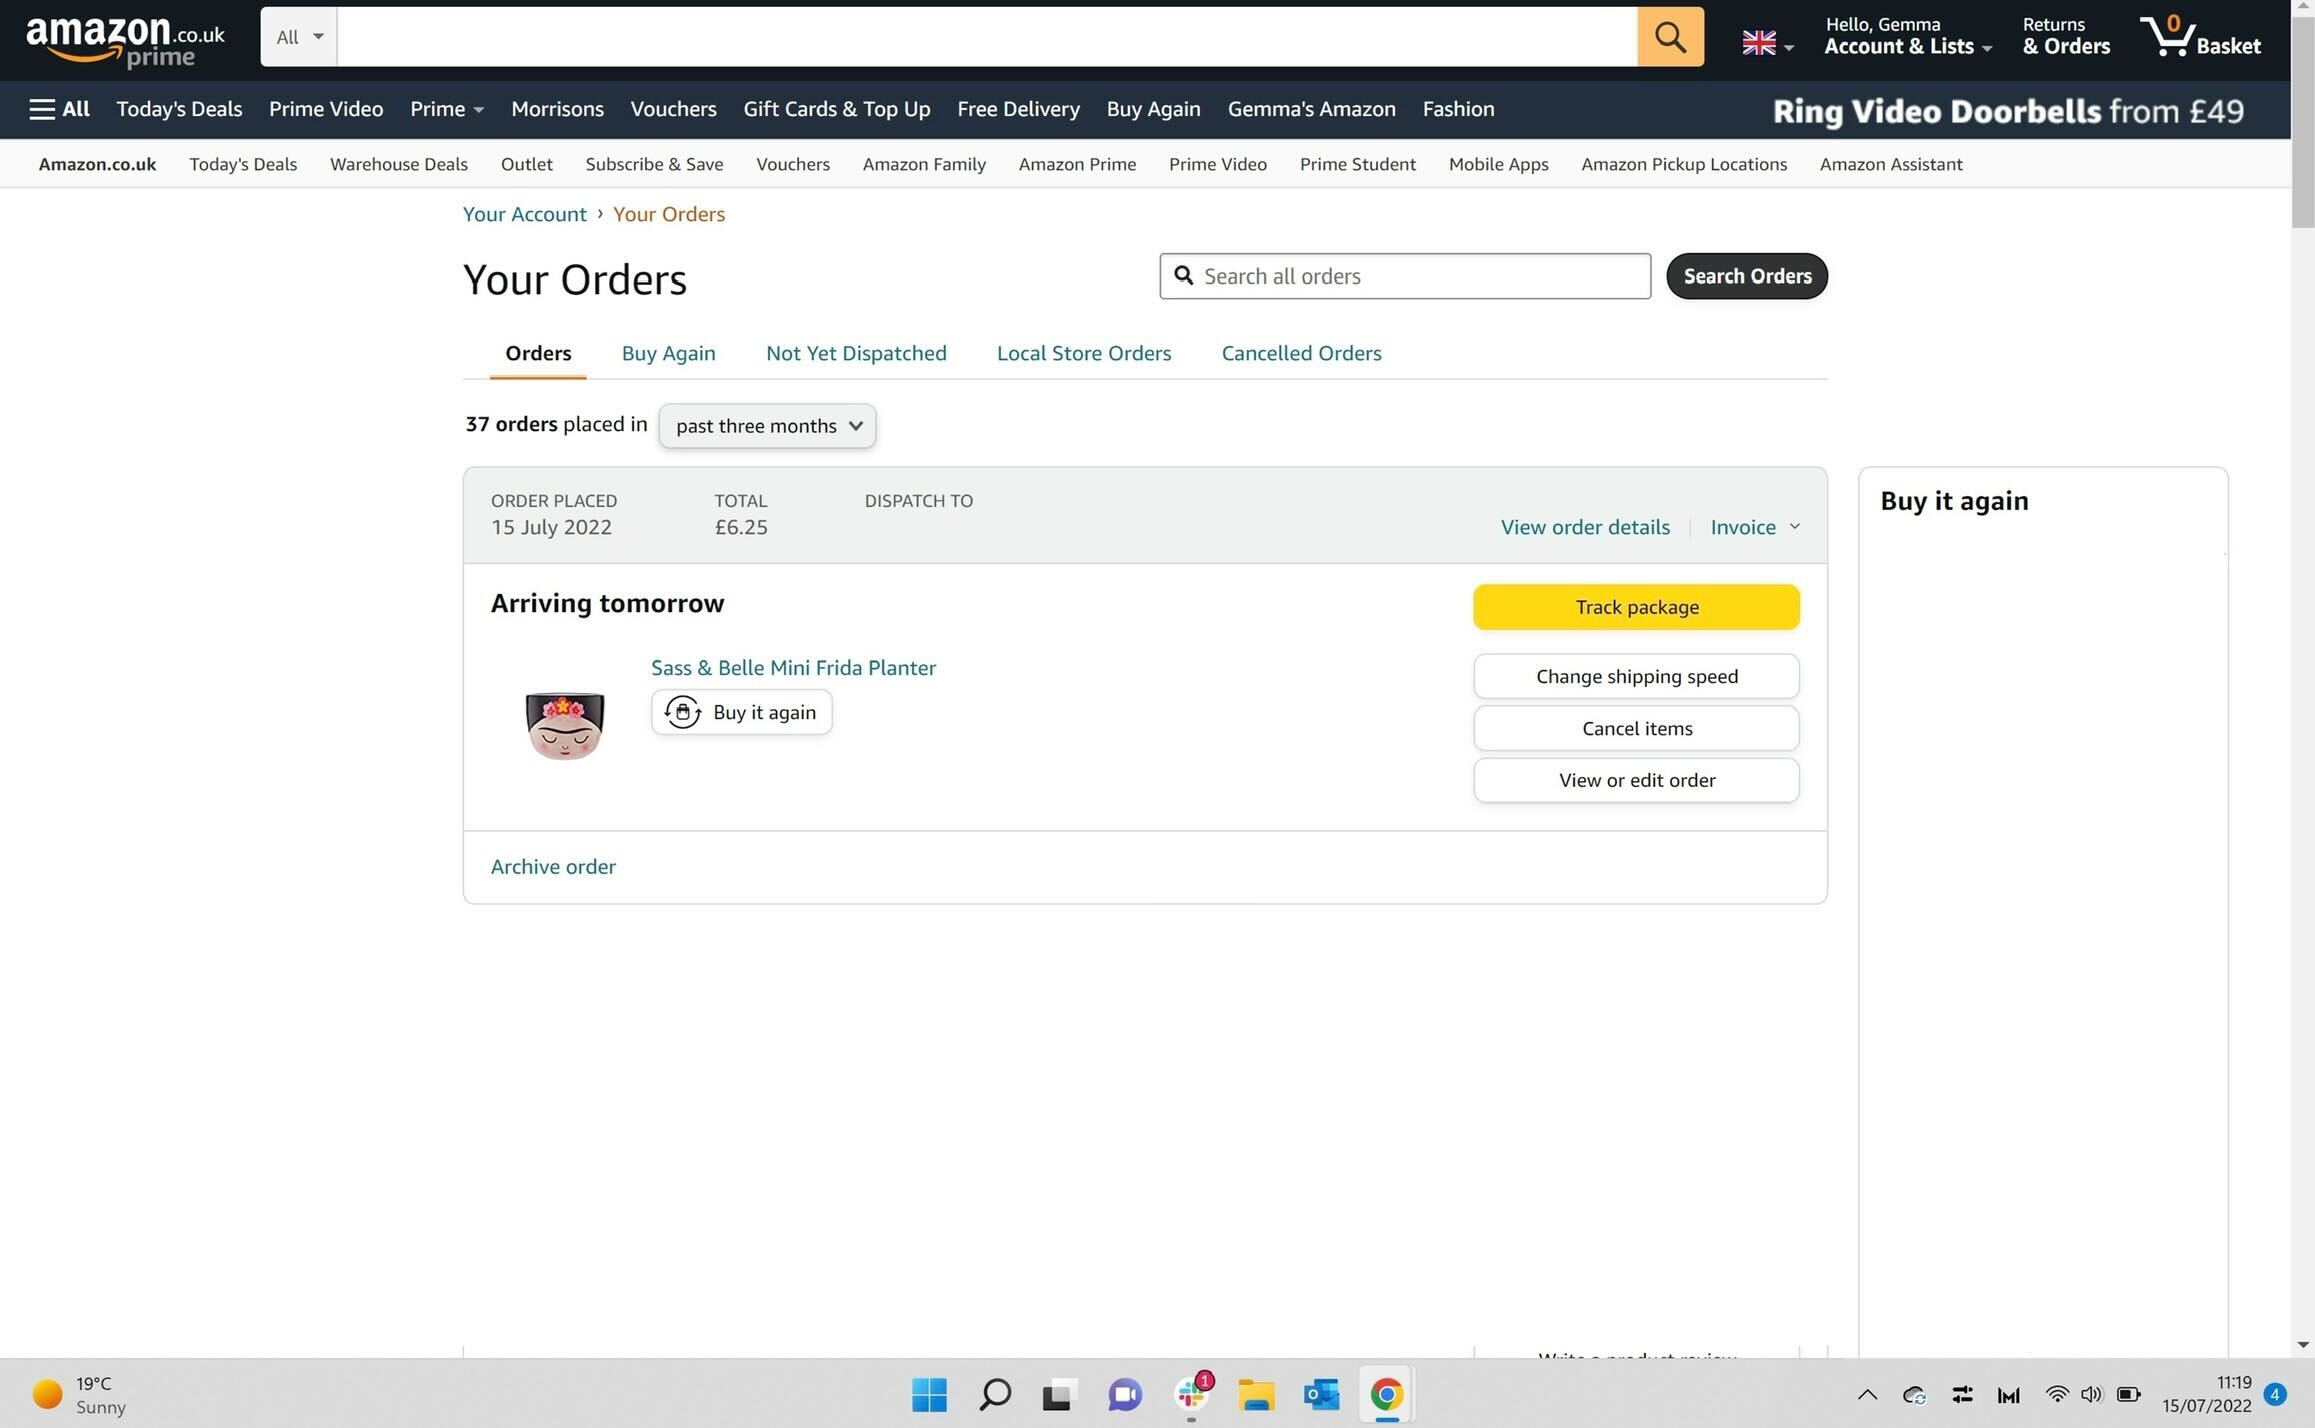 How to Cancel Orders on Amazon